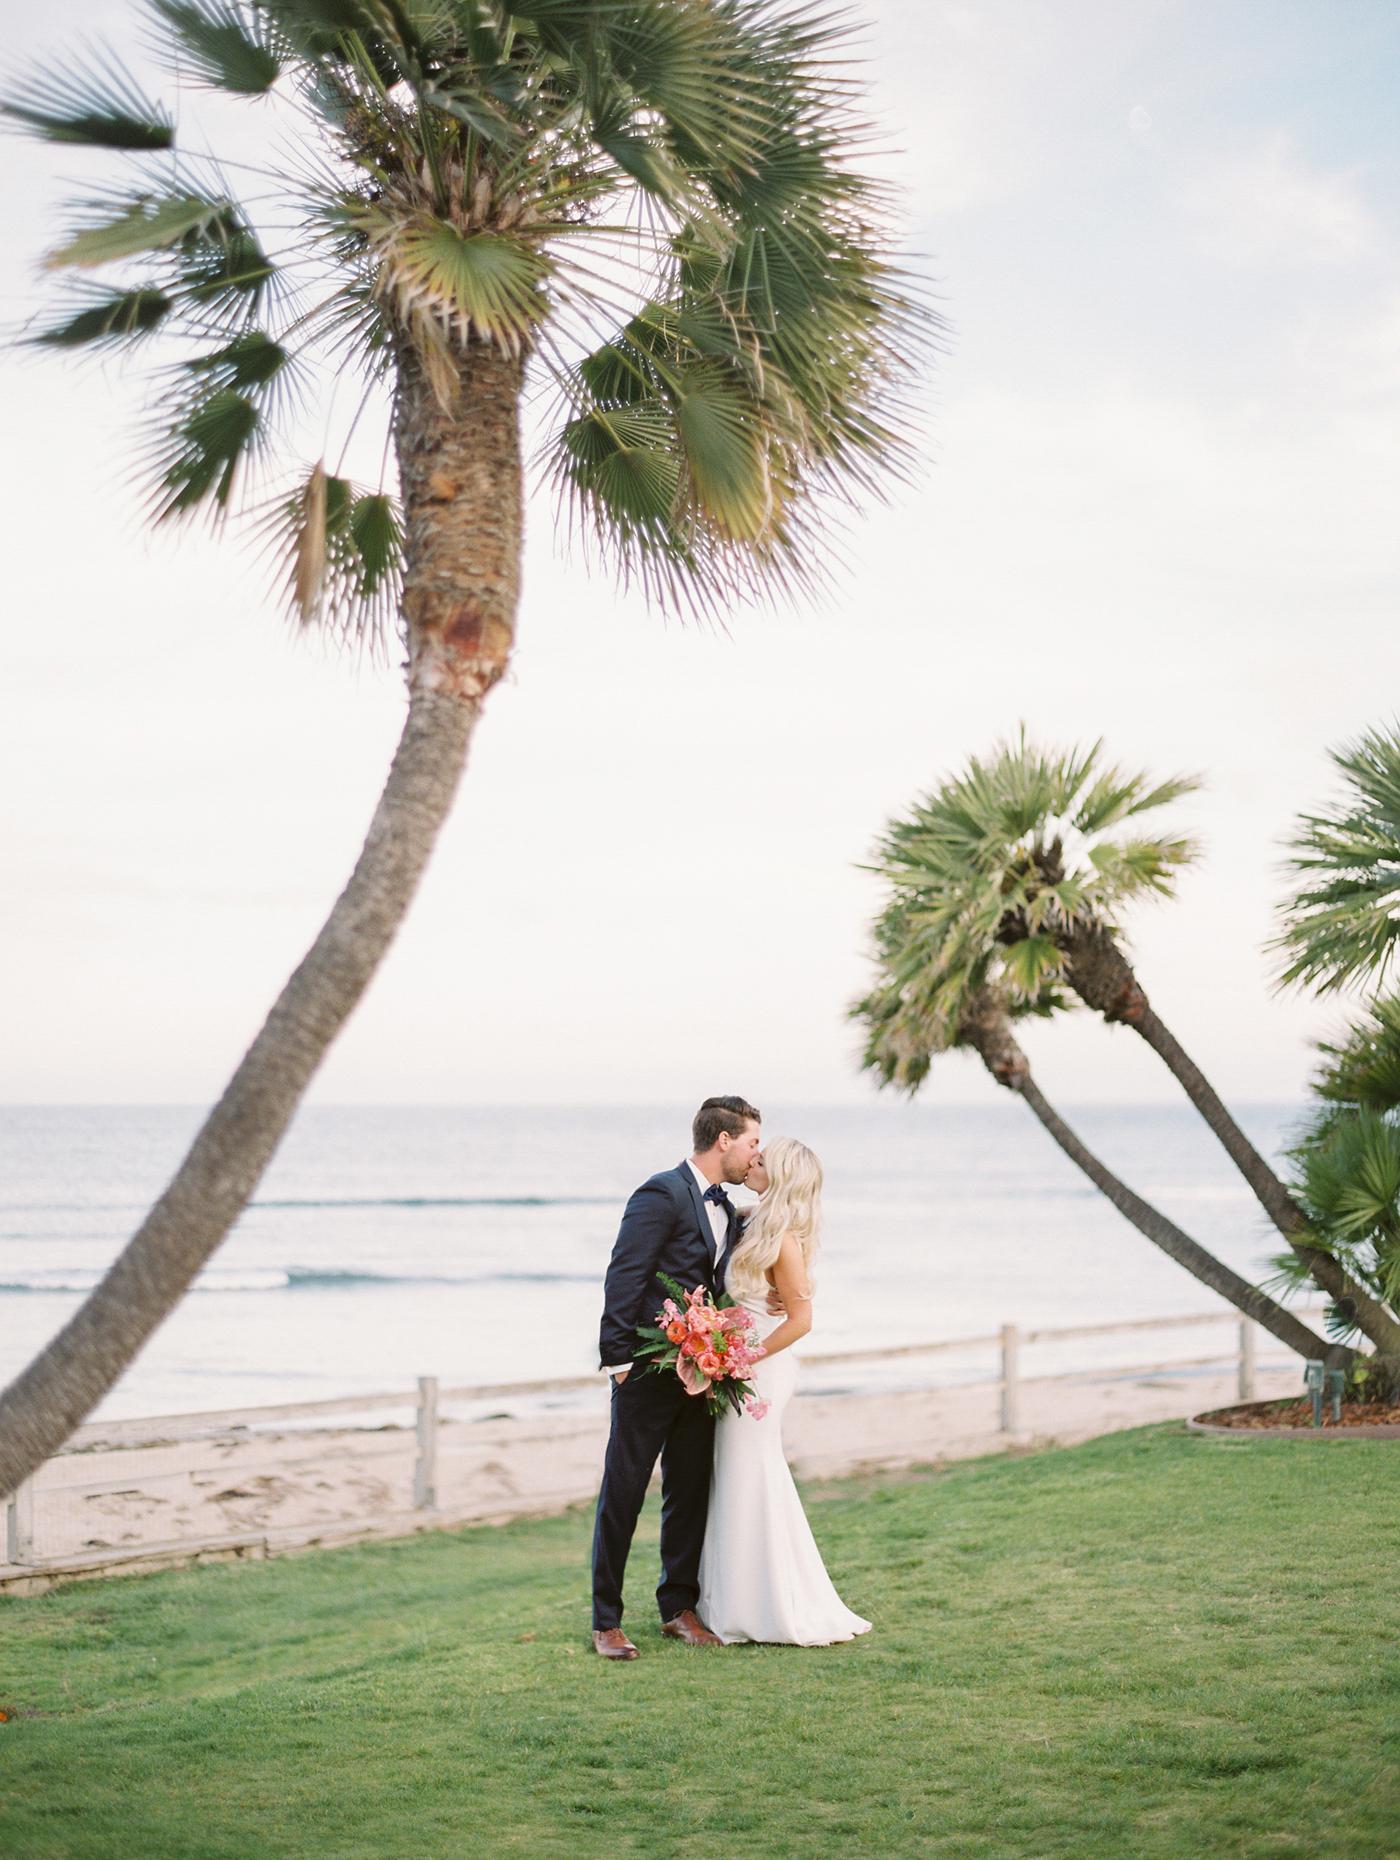 15 Jaw Dropping Wedding Venues In Malibu